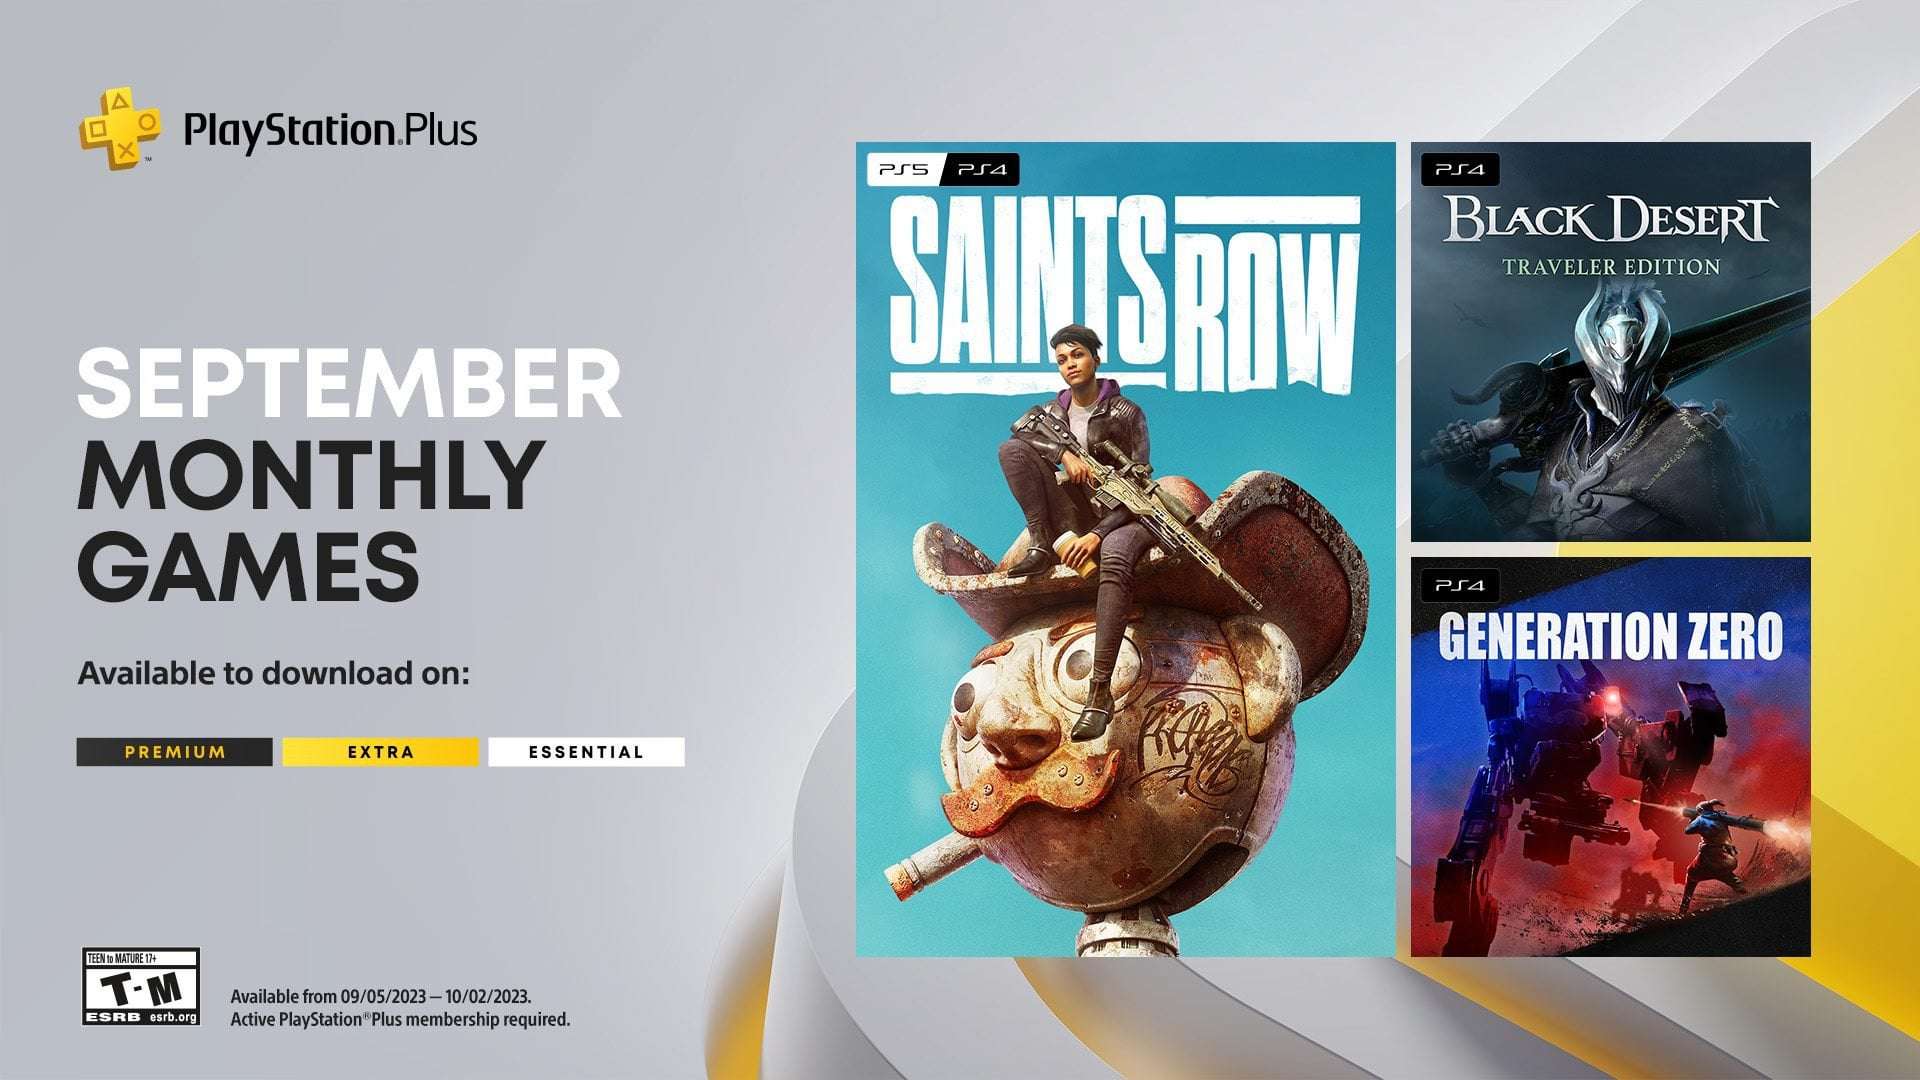 image for PlayStation Plus Monthly Games for September: Saints Row, Black Desert – Traveler Edition, Generation Zero